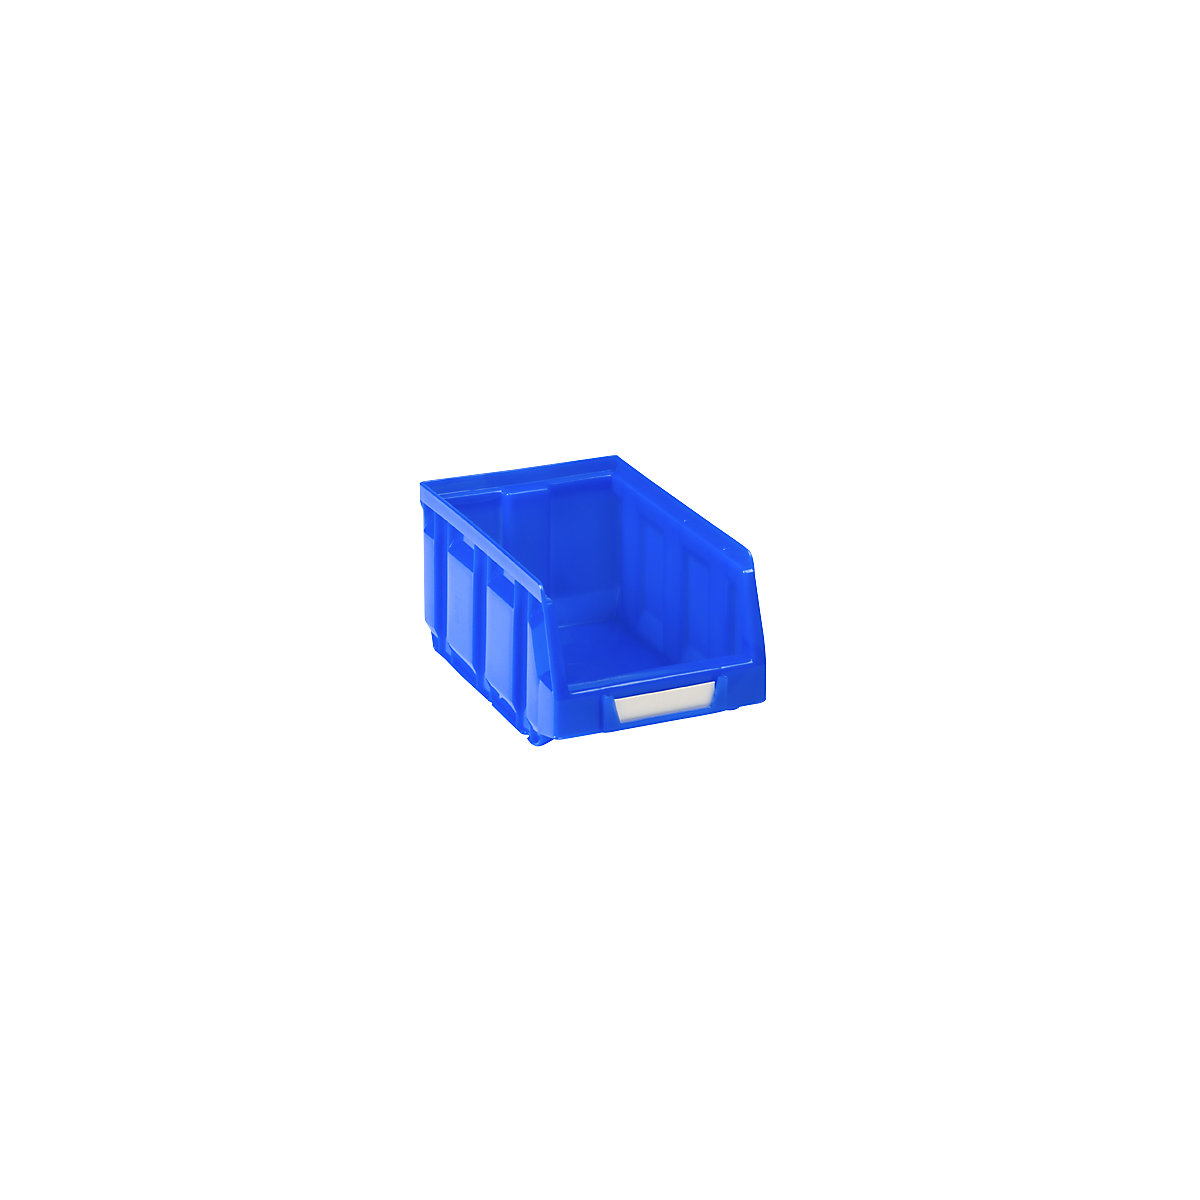 Magazijnbak van polyethyleen, l x b x h = 167 x 105 x 82 mm, blauw, VE = 48 stuks-7